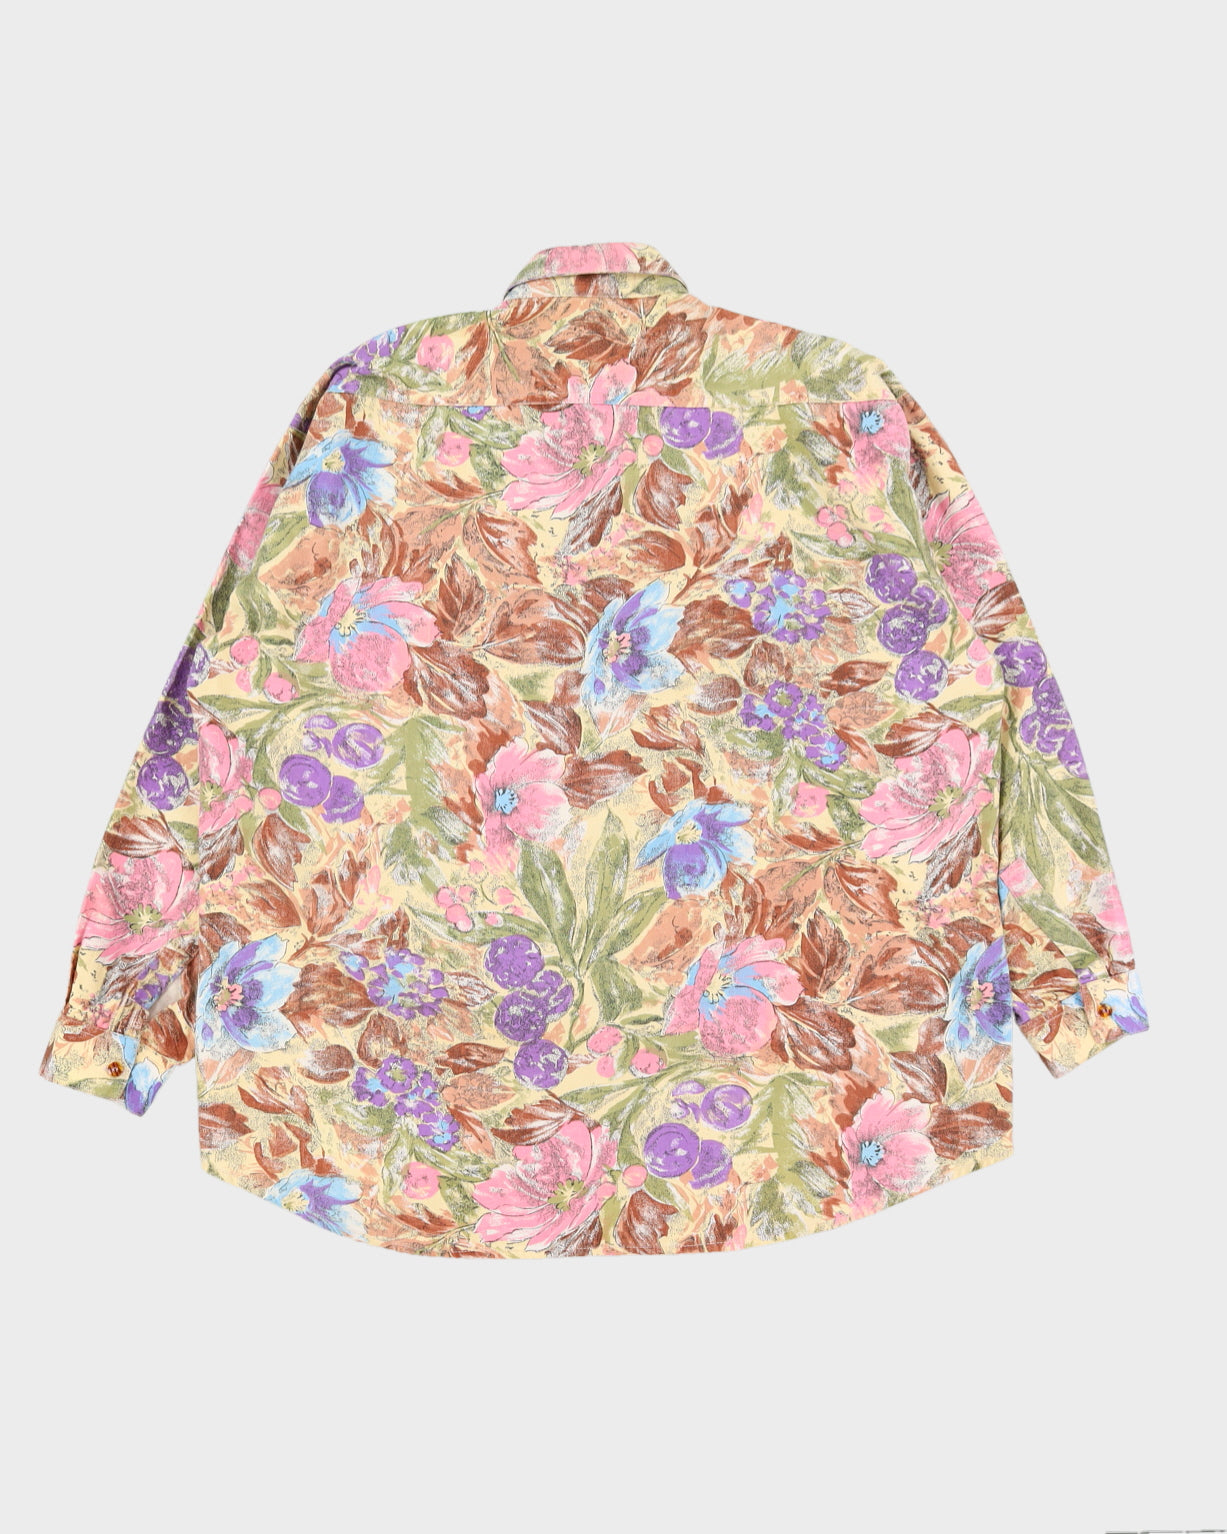 Vintage 90s Fashion Up Floral Shirt - XL